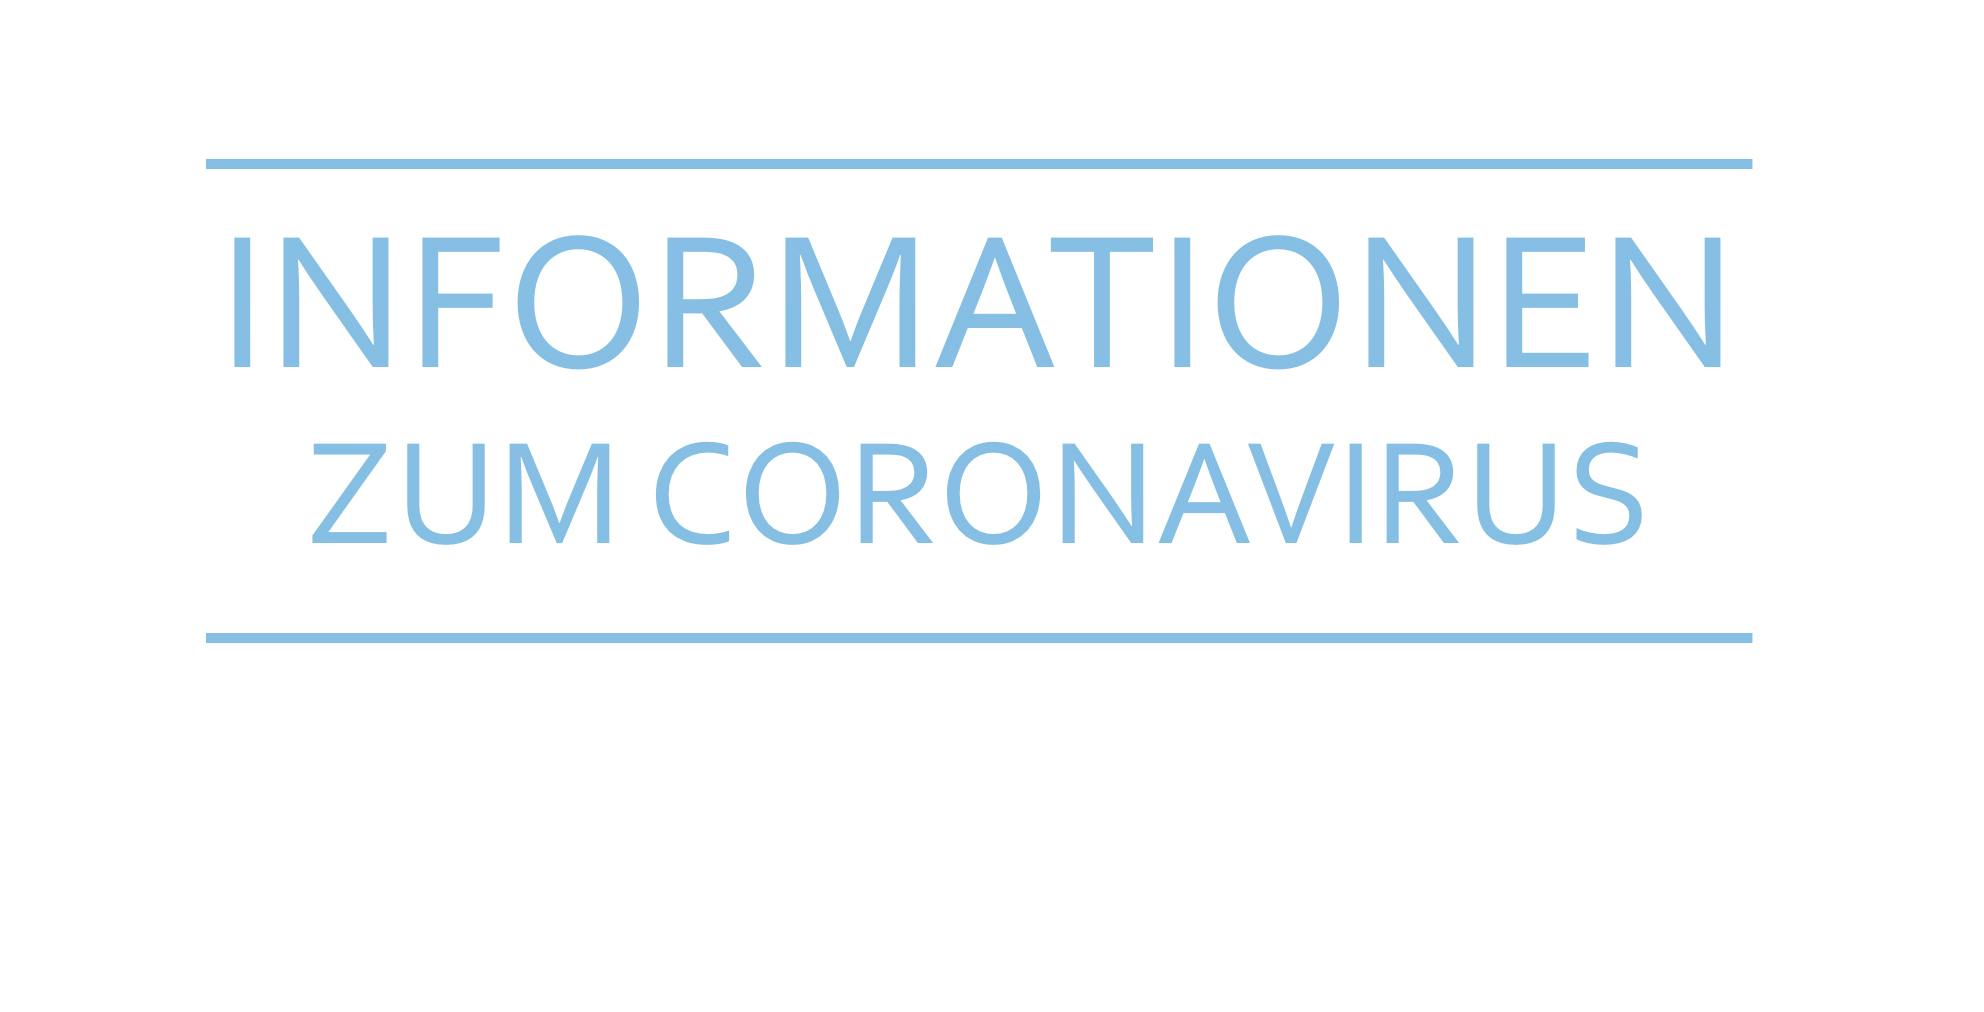 Informationen Coronavirus